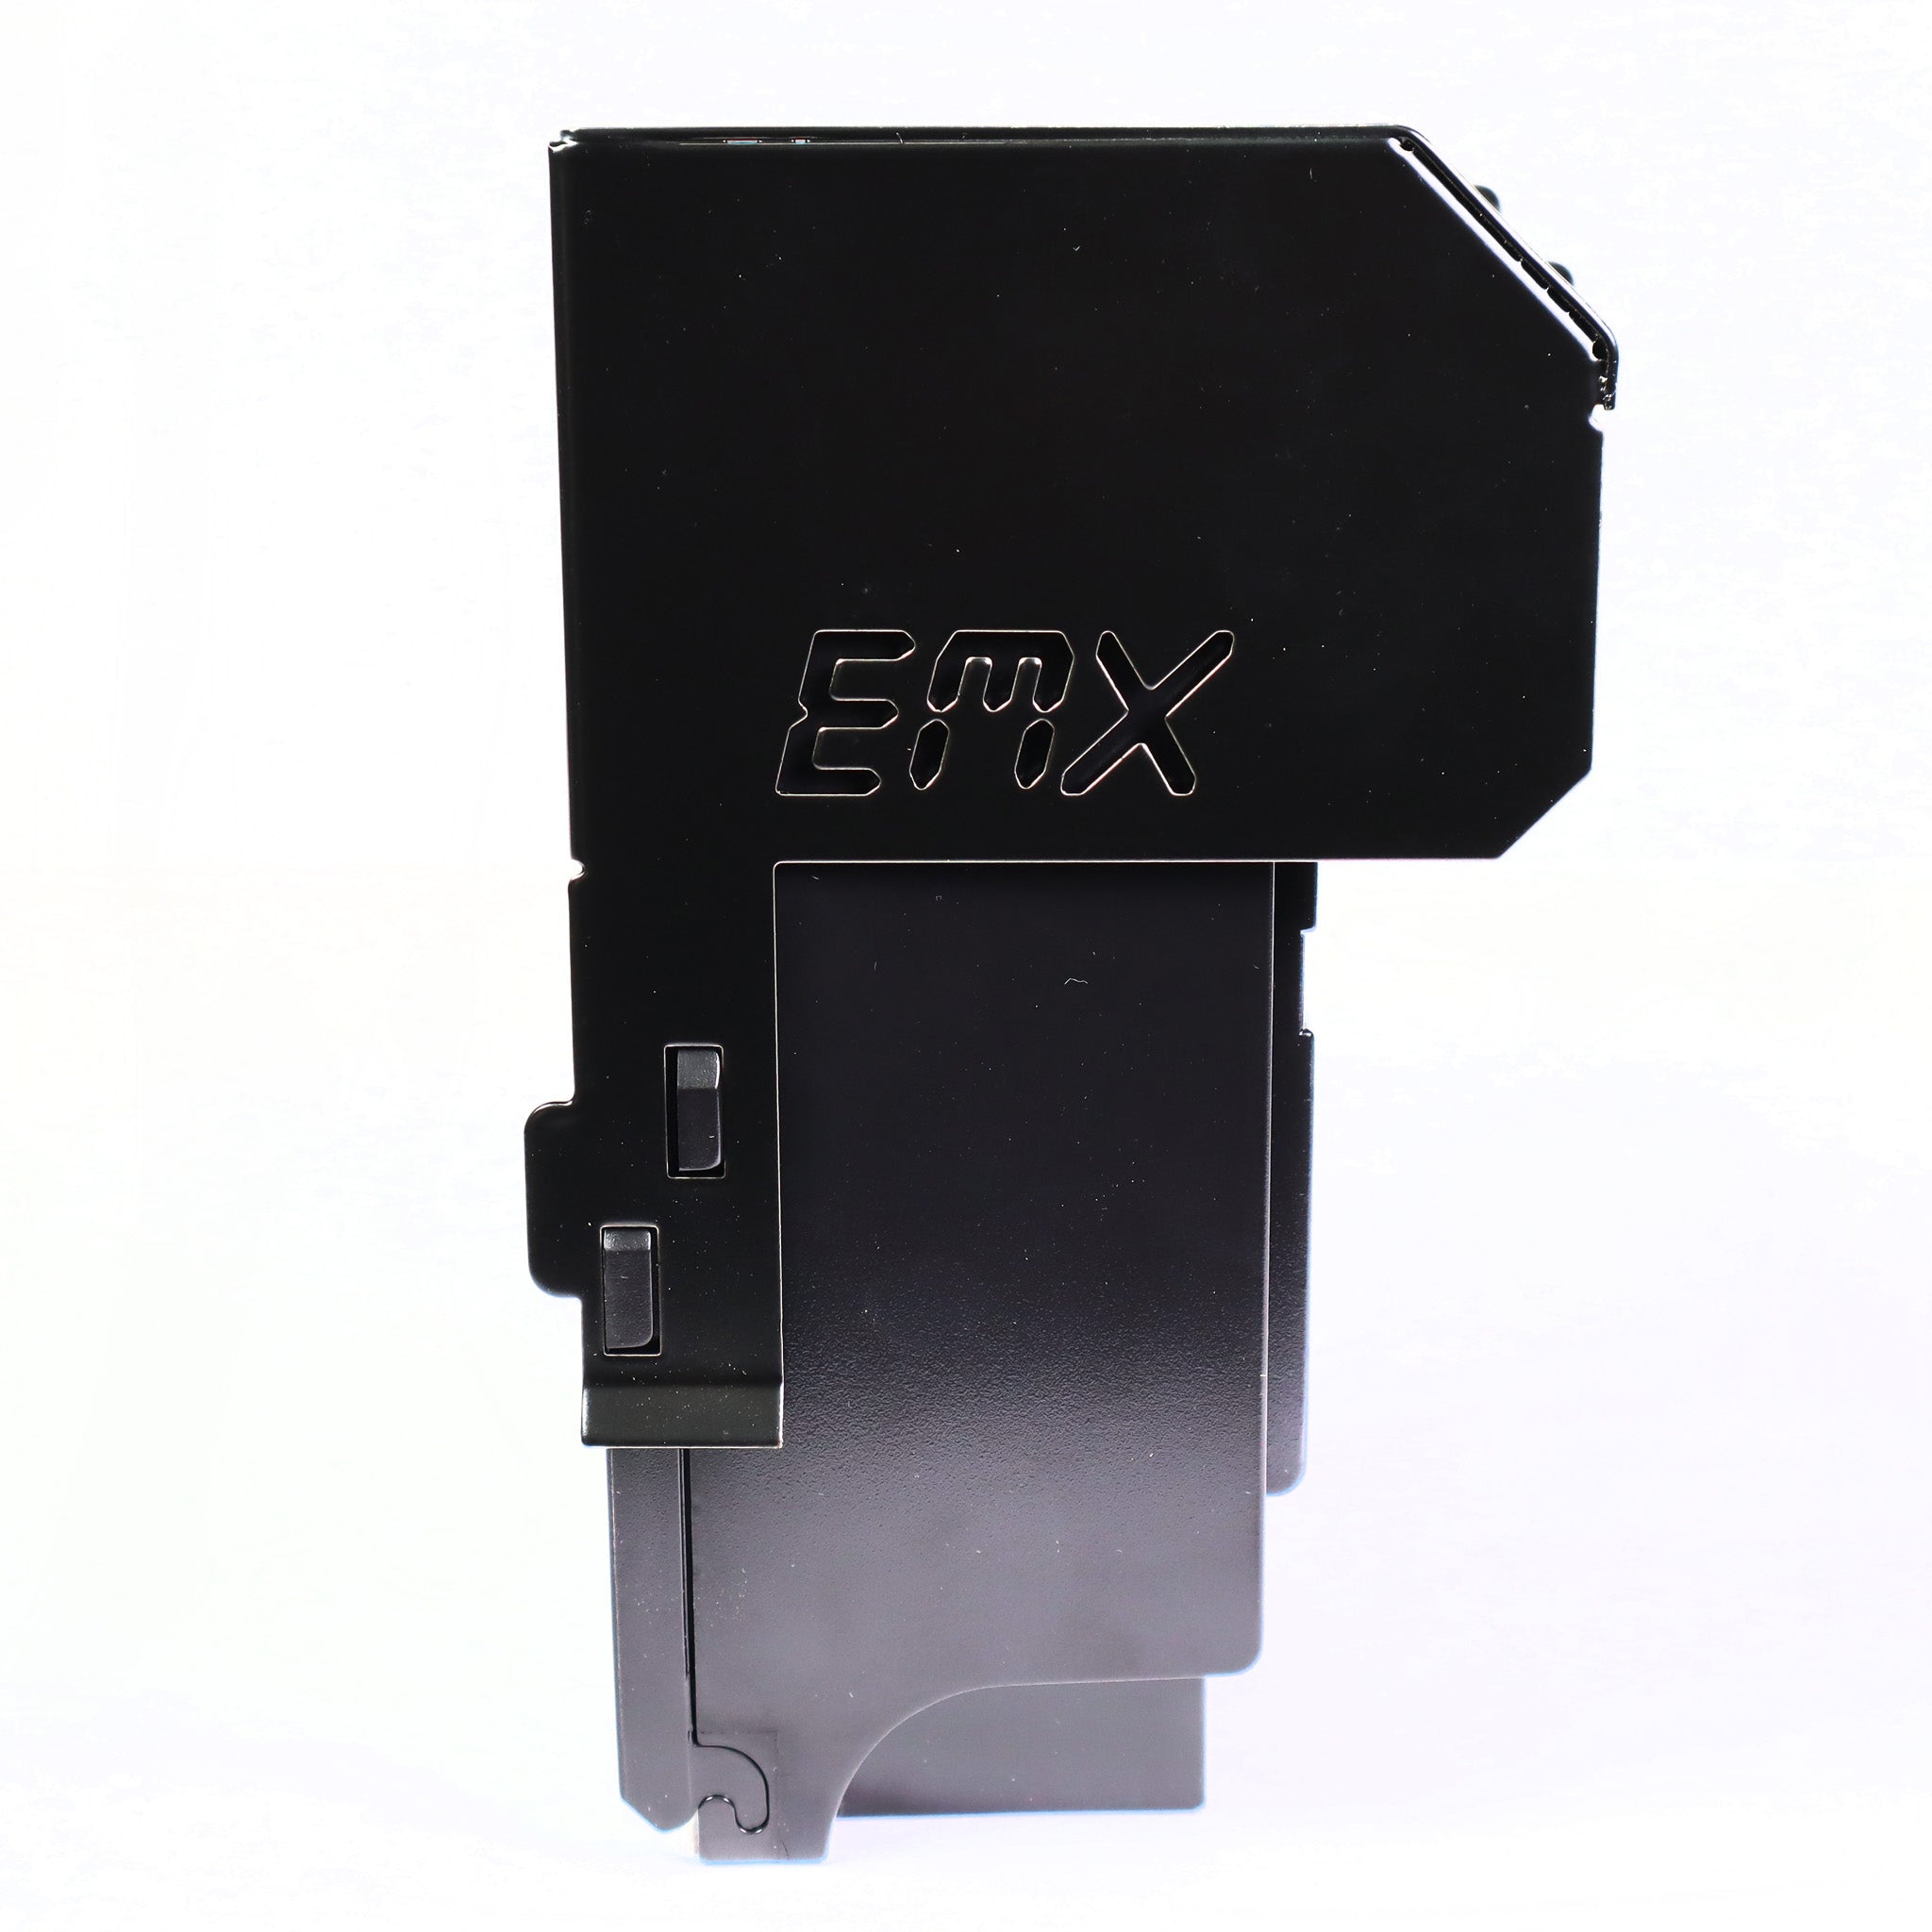 EMX IRB-RET Universal Retroreflective Photoeye